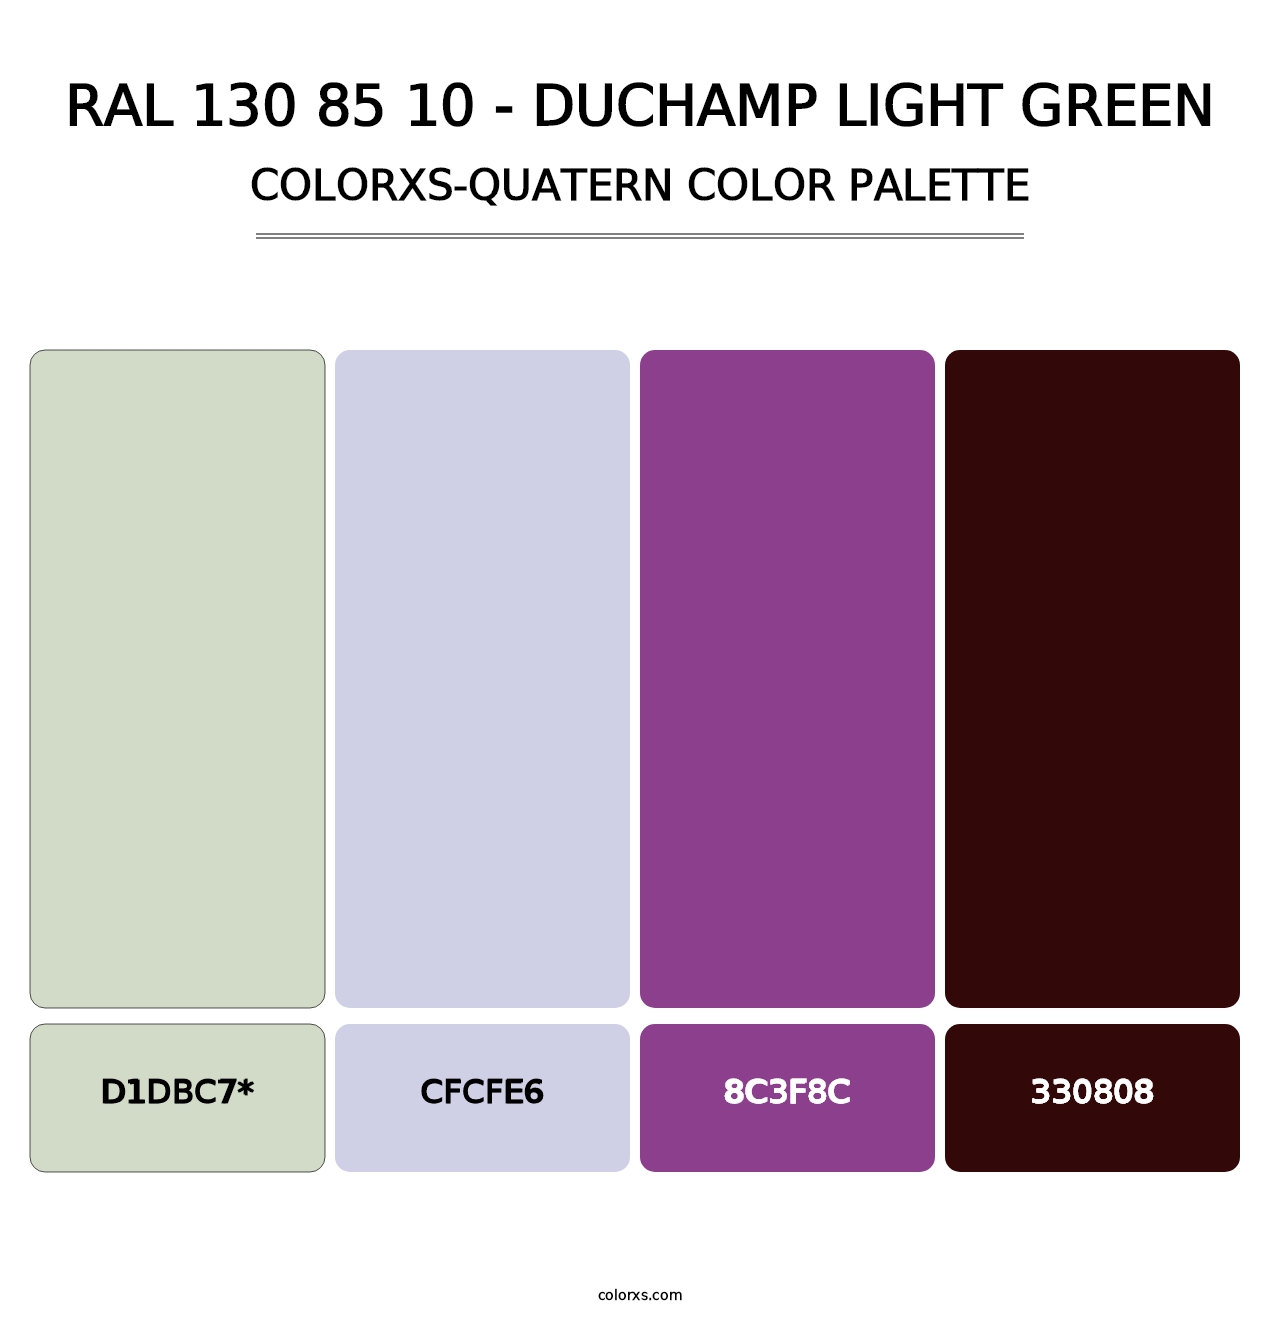 RAL 130 85 10 - Duchamp Light Green - Colorxs Quatern Palette